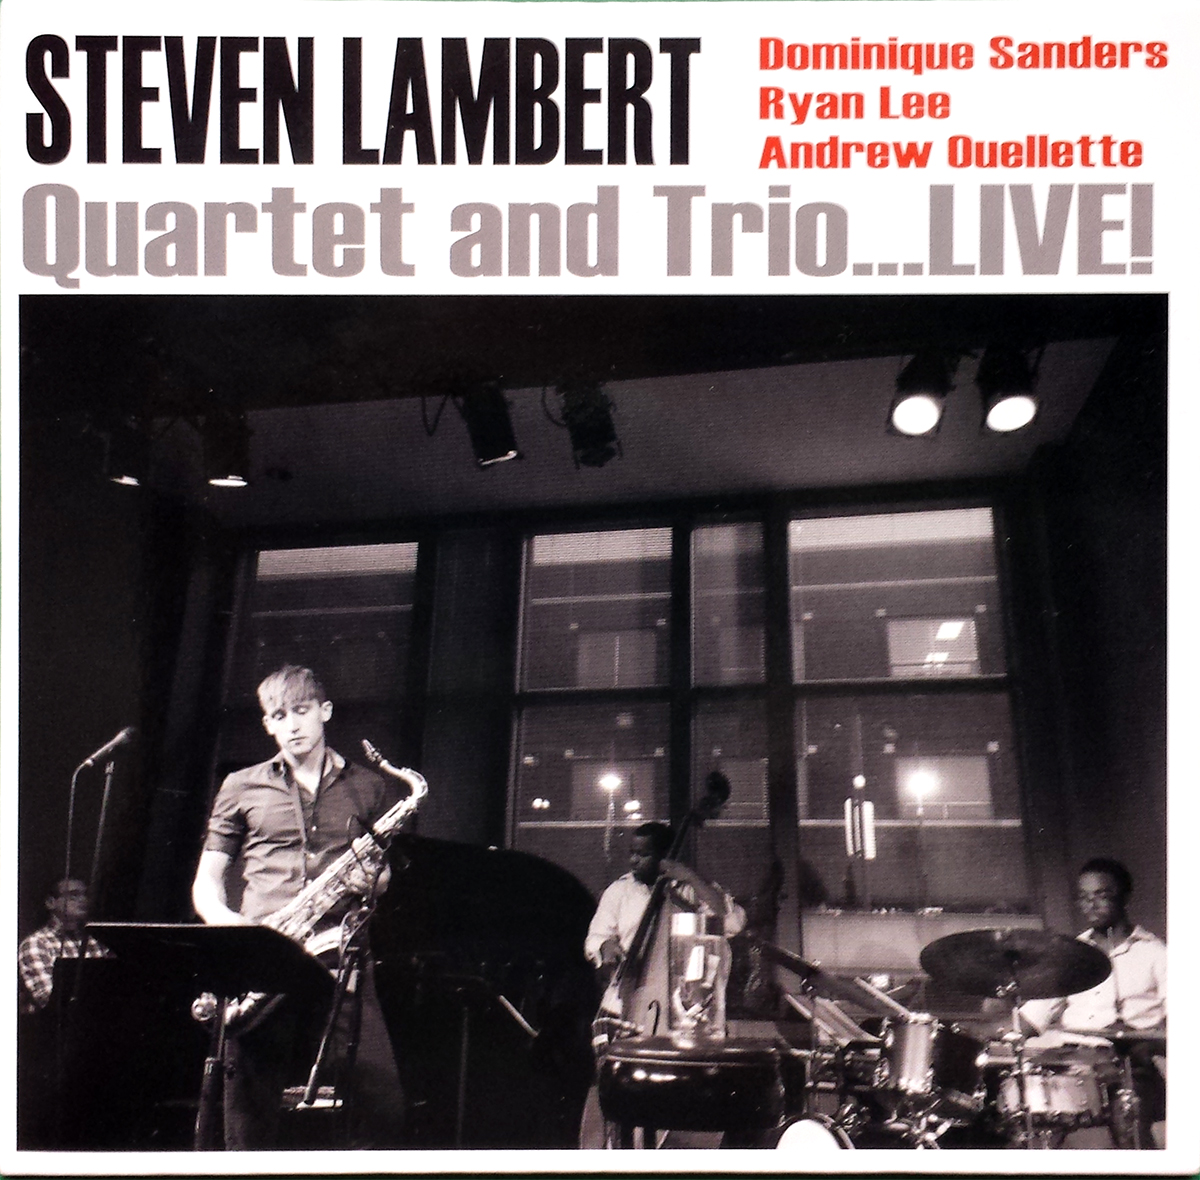 Steven Lambert - Steven Lambert Quartet and Trio... Live!